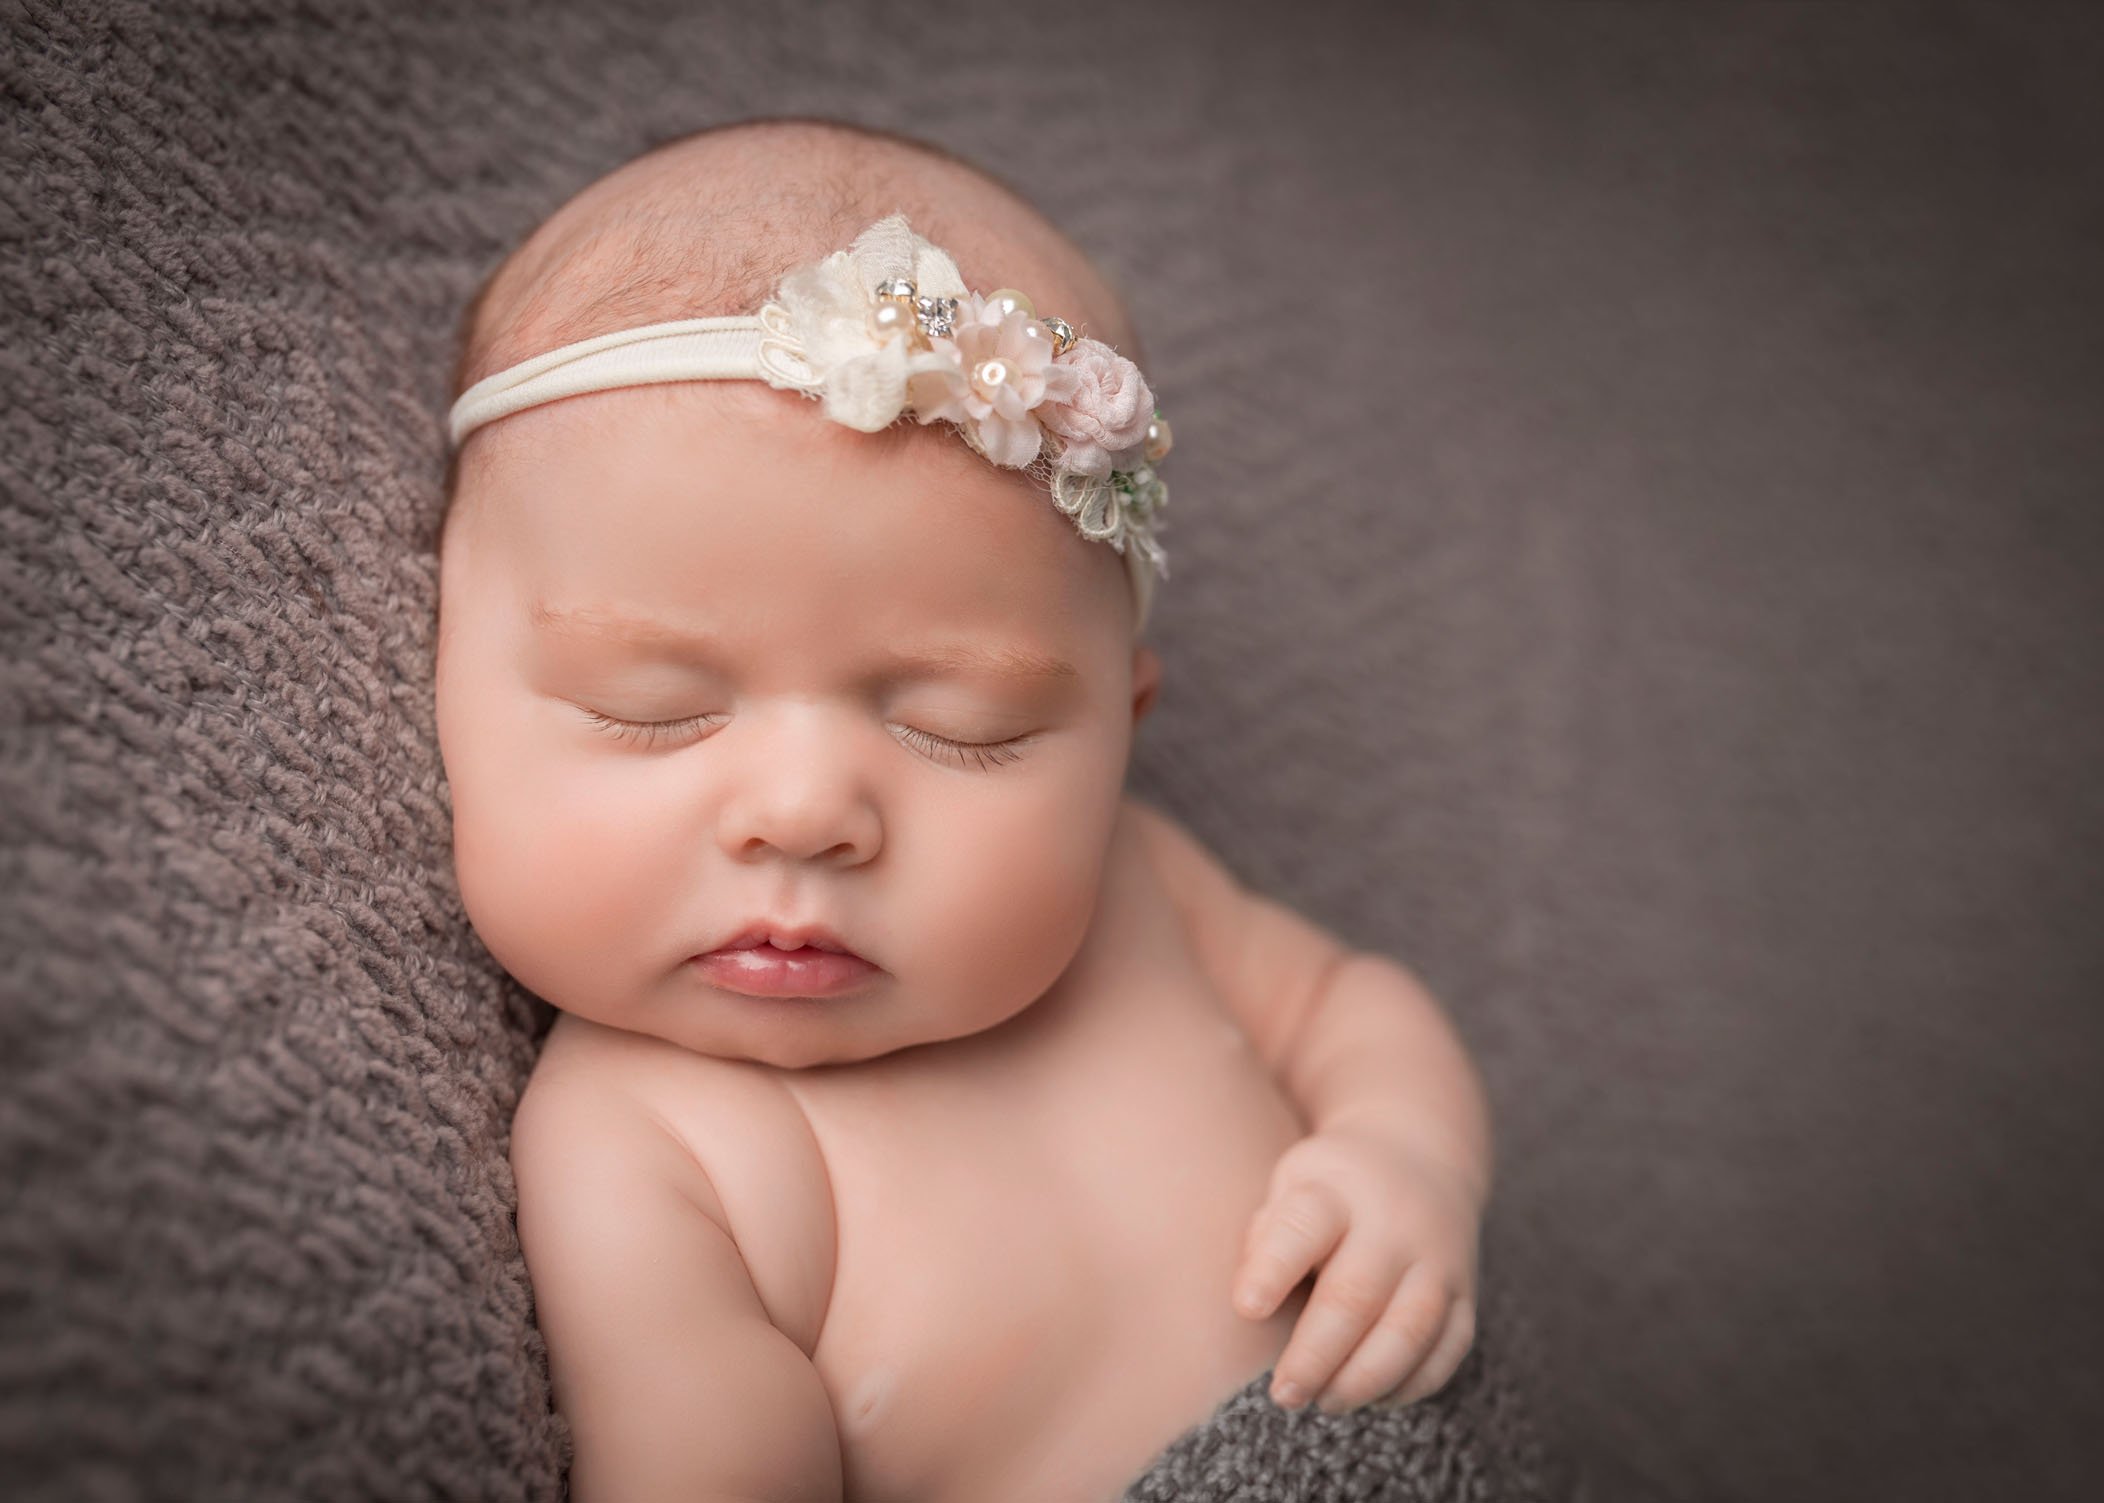 newborn baby girl sleeping with floral headband on